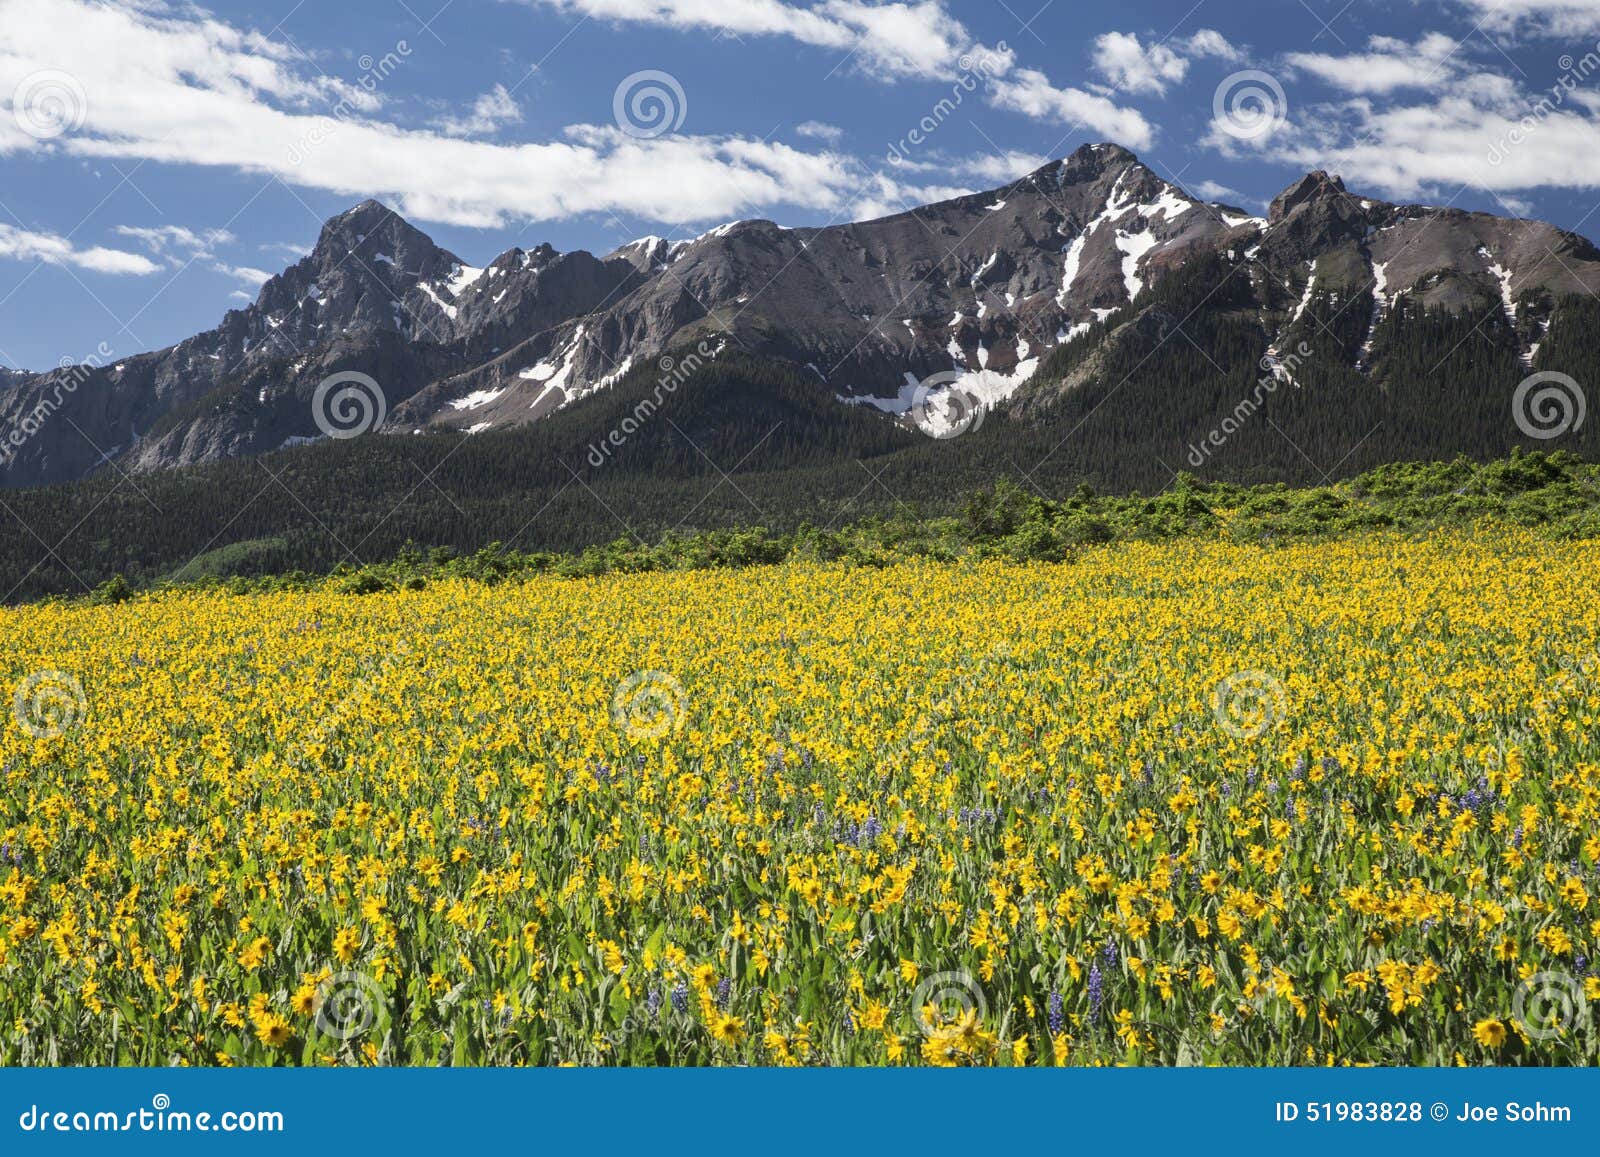 yellow mules ear field and san juan mountains, hastings mesa, near last dollar ranch, ridgway, colorado, usa